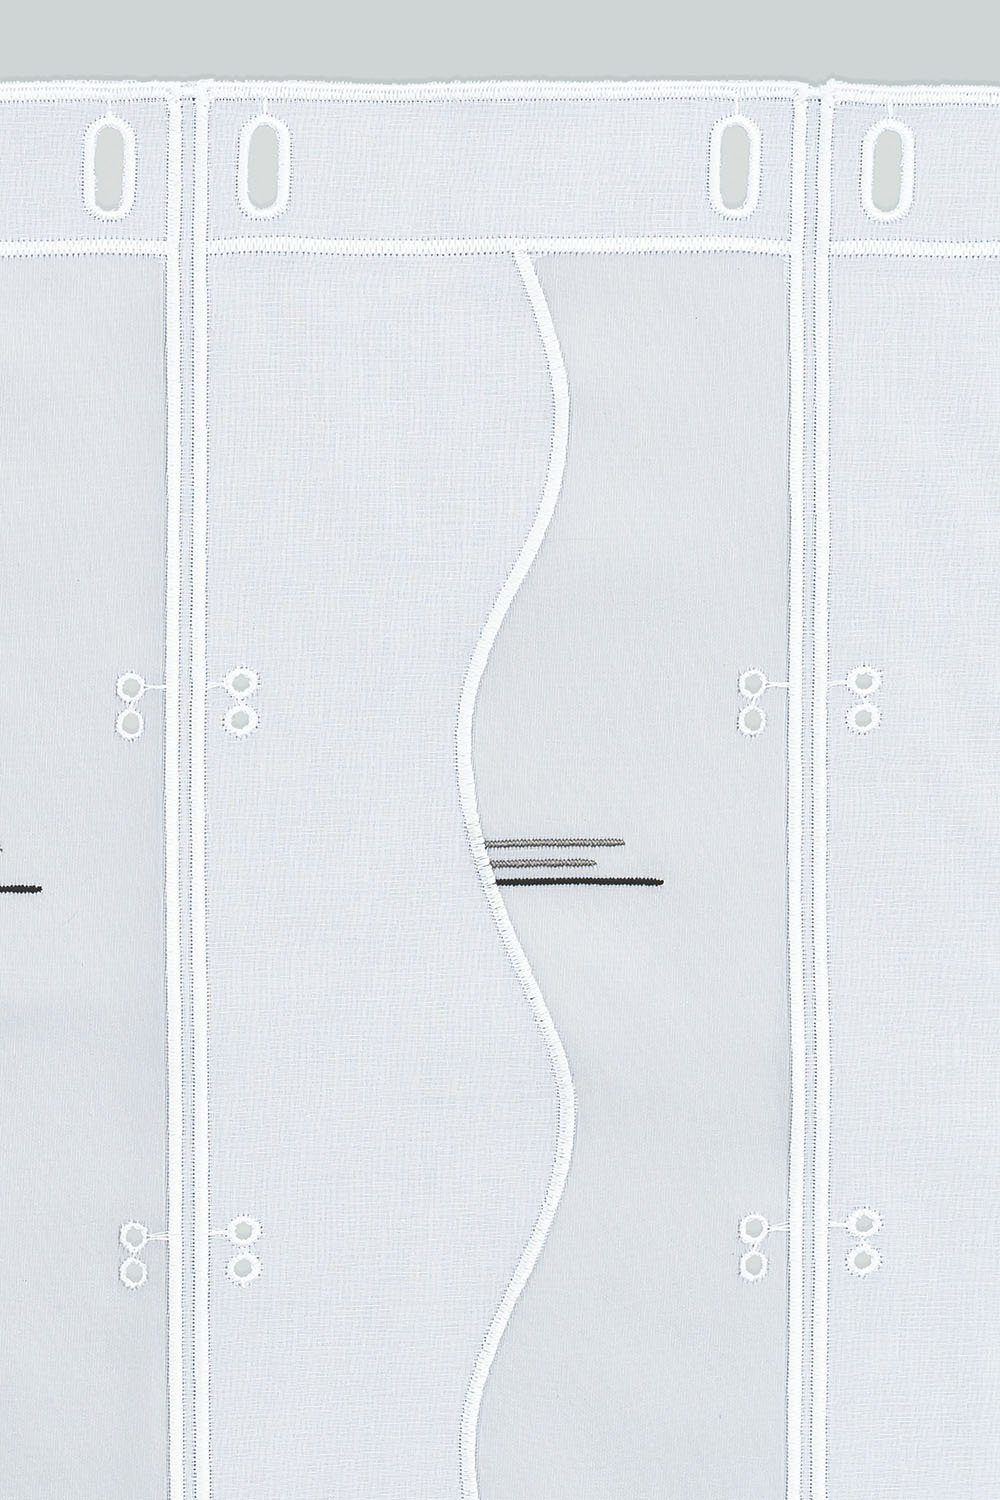 Panneaux Panneaux Laihka, (1 St), LYSEL®, transparent, HxB weiß/grau 140x80cm